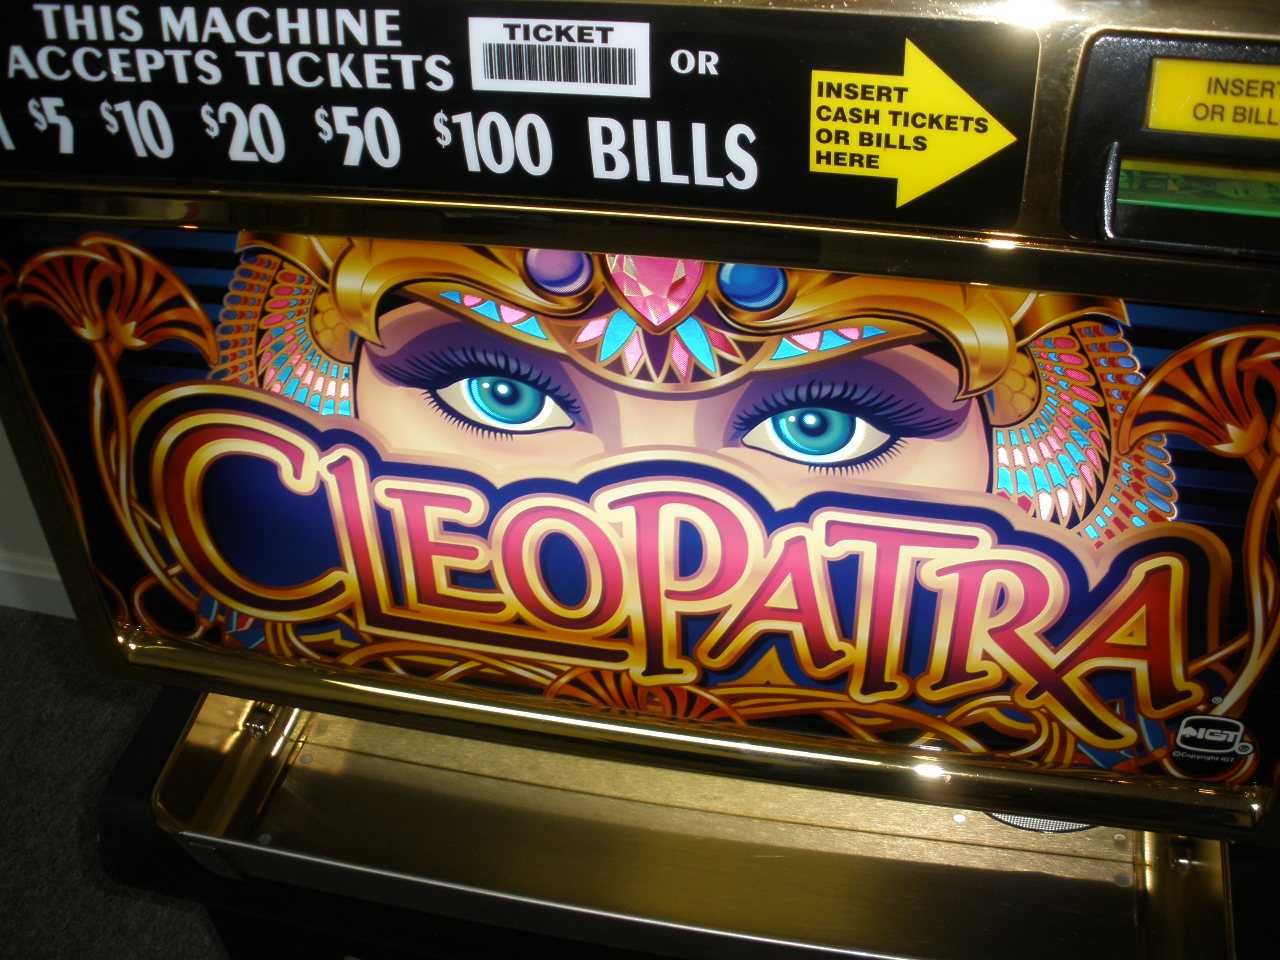 Slot Machine Reels